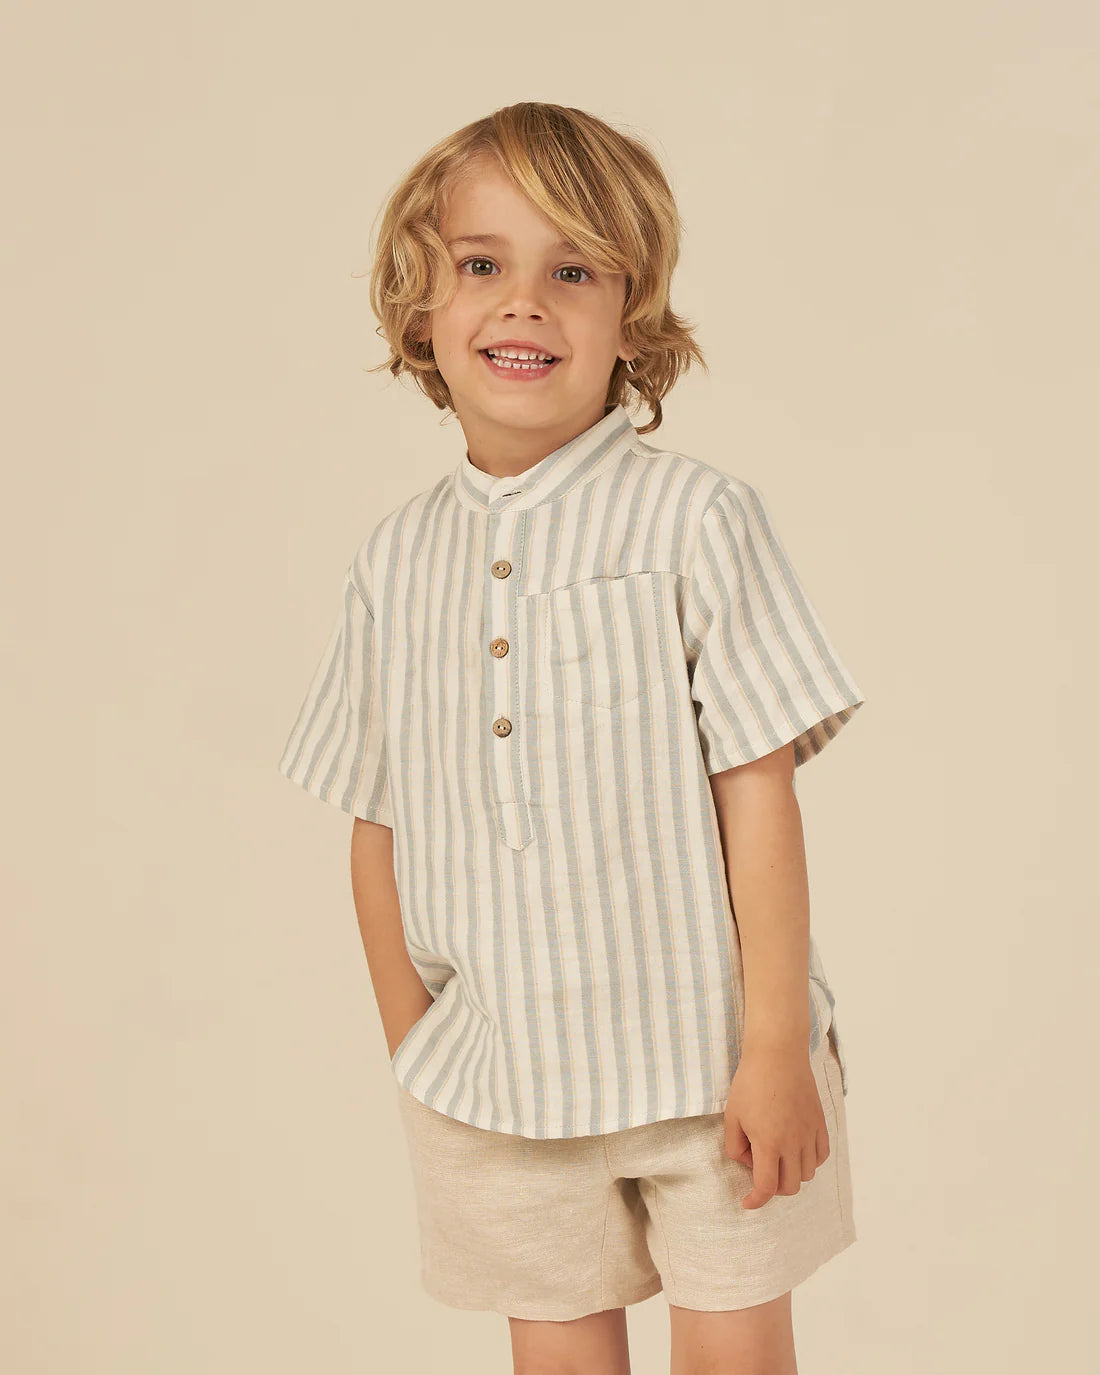 Mason Shirt in Ocean Stripe  - Doodlebug's Children's Boutique